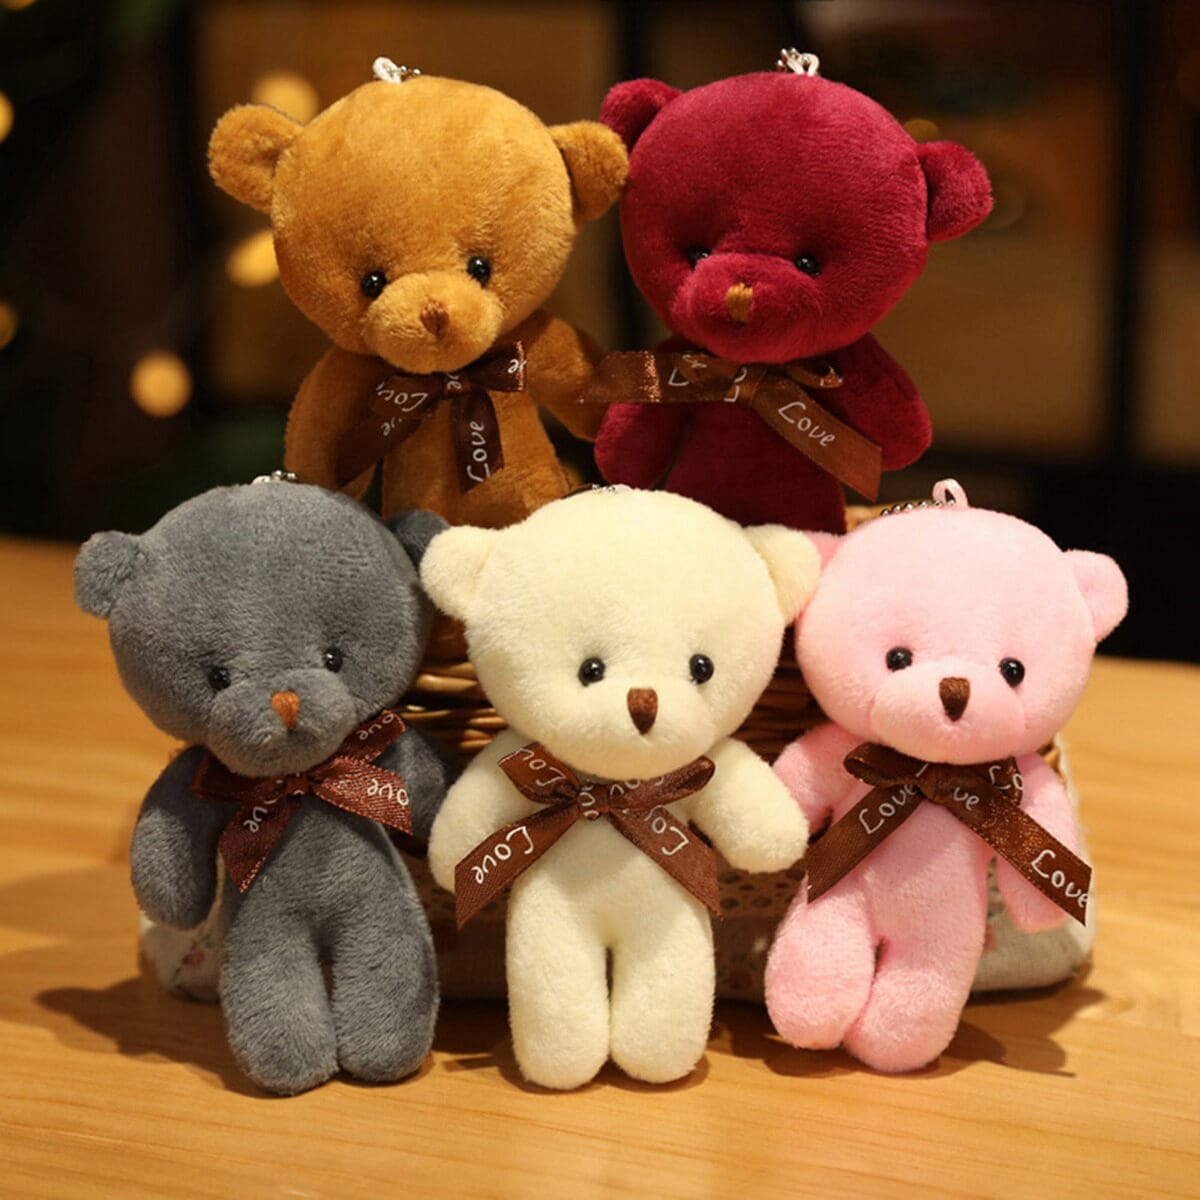 5pcs/Sets Teddy Bears Dolls Stuffed Plush Toy for Kids Gifts